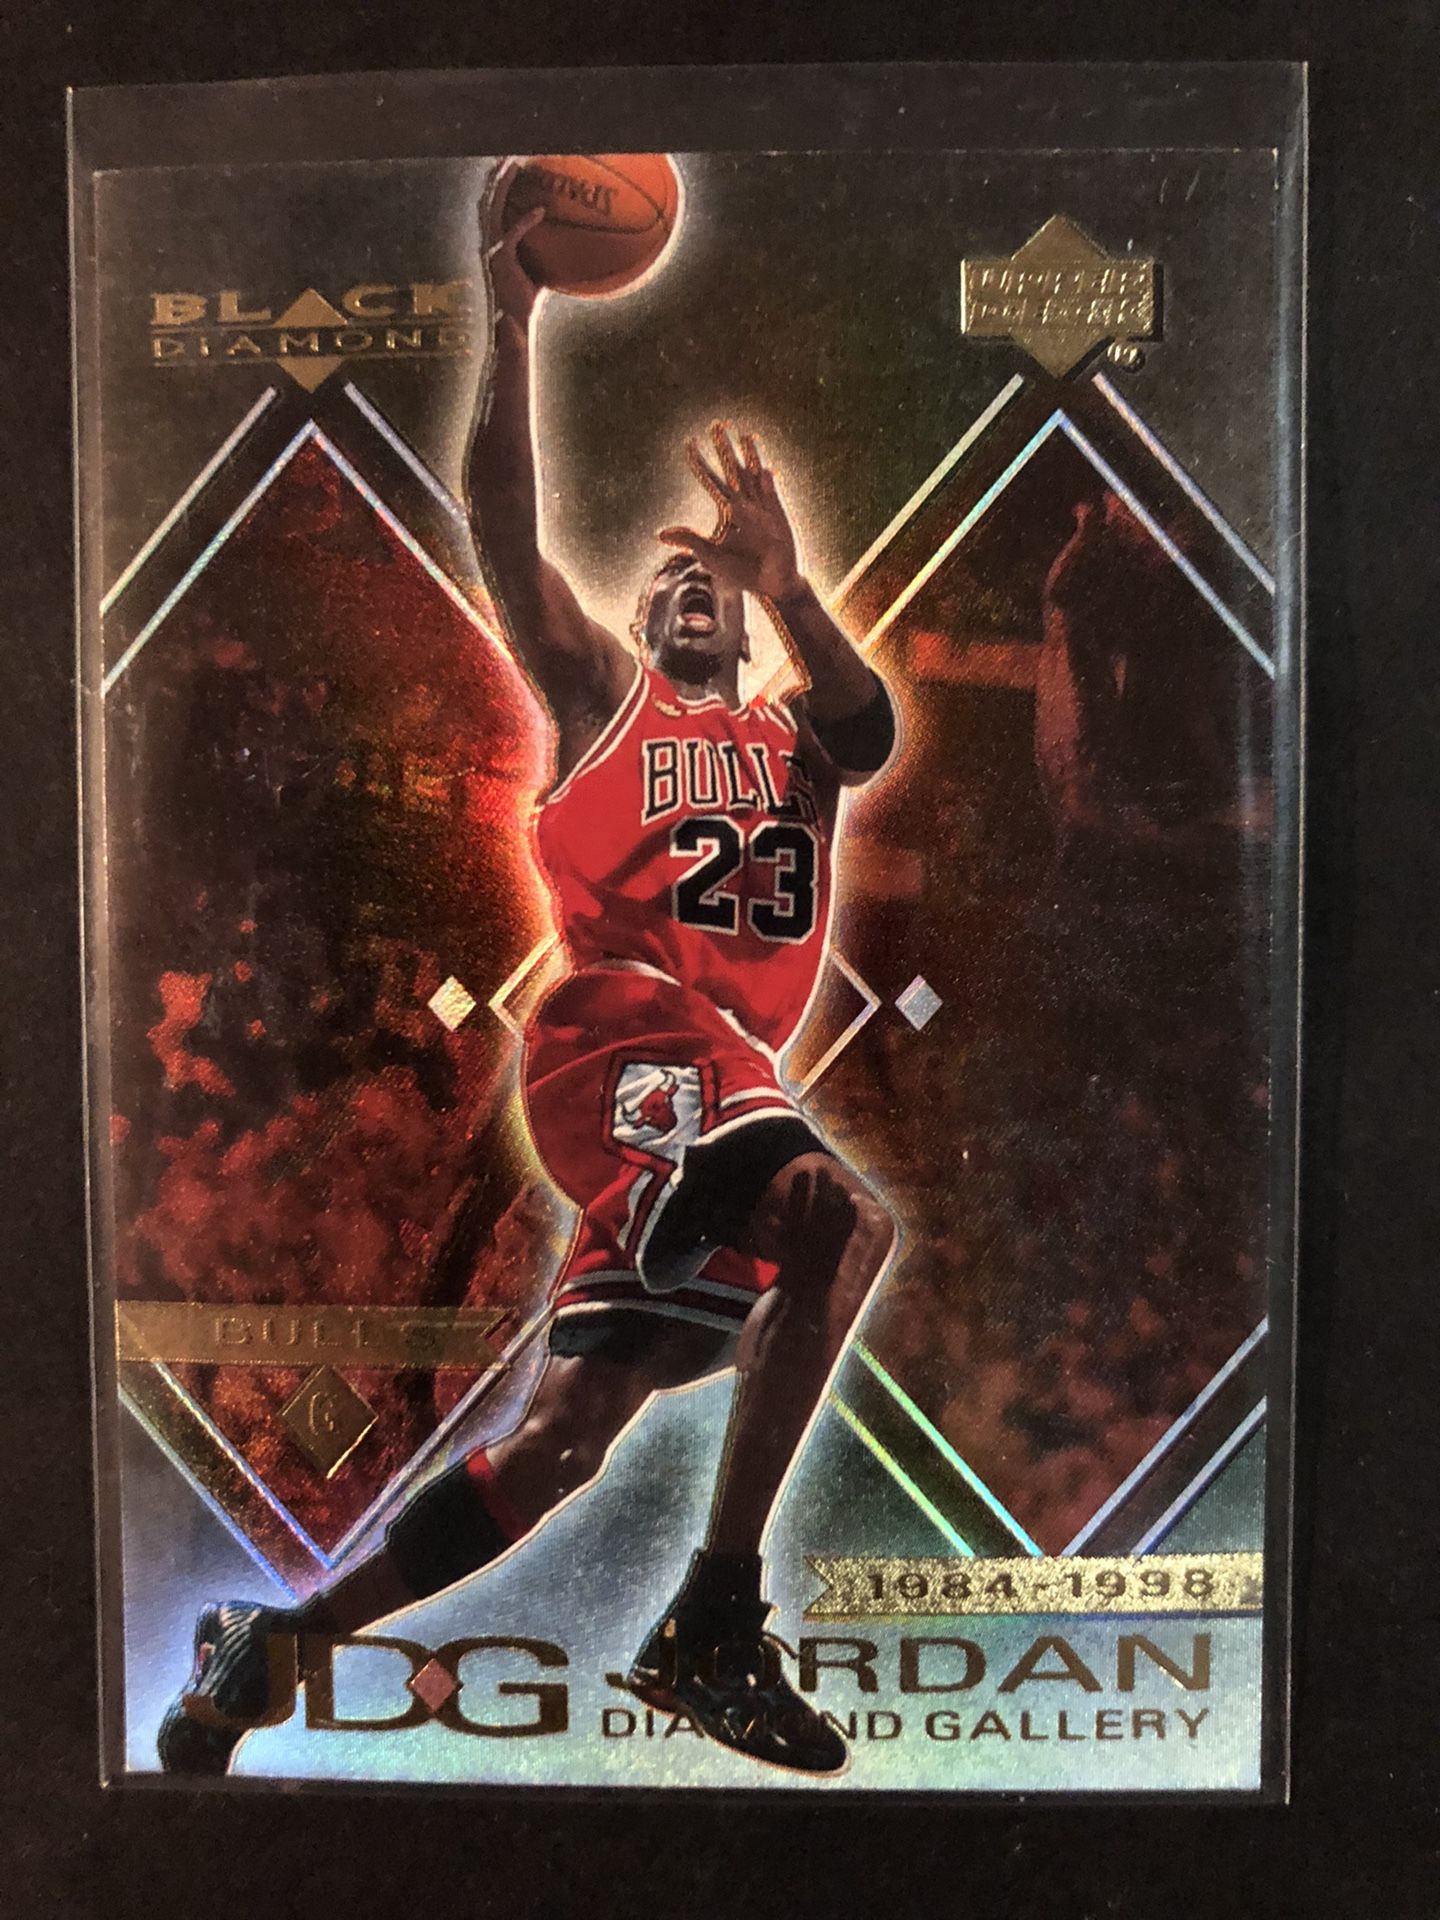 Michael Jordan 2000 Upper Deck Basketball Card Black Diamond Gallery. Air Jordan Chicago Bulls Basketball Trading Card